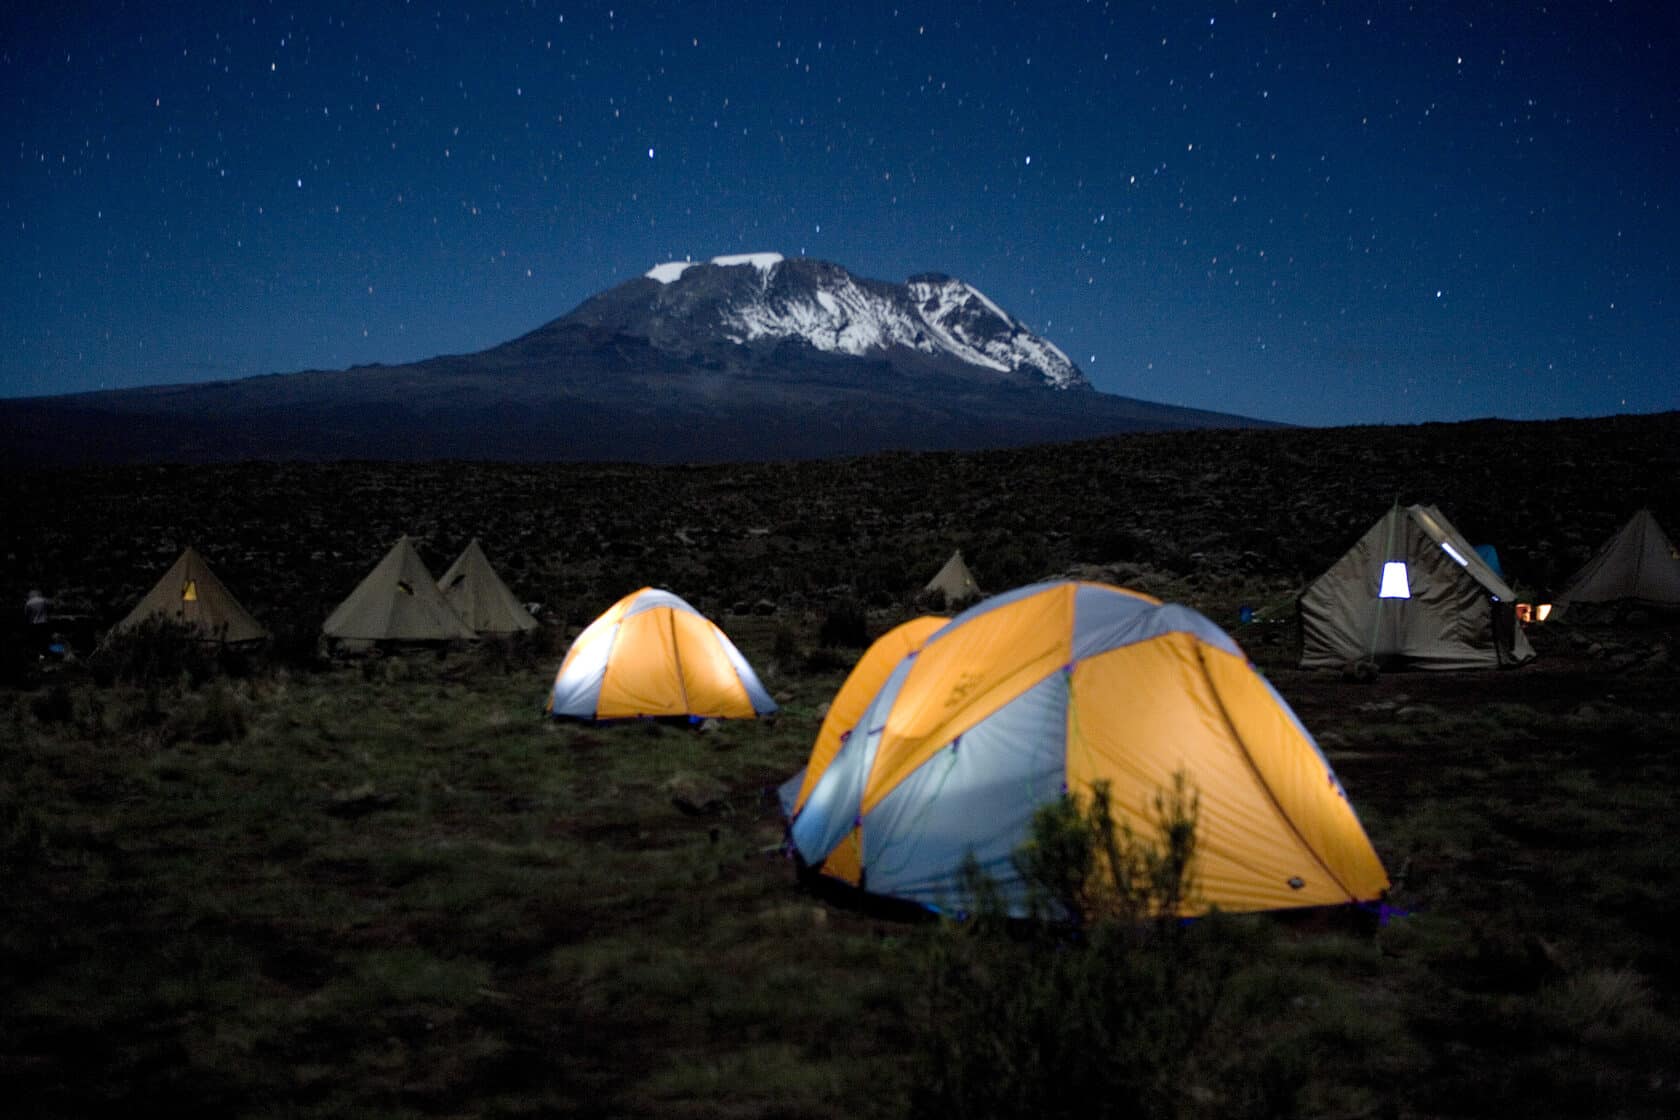 kilimanjaro trek price